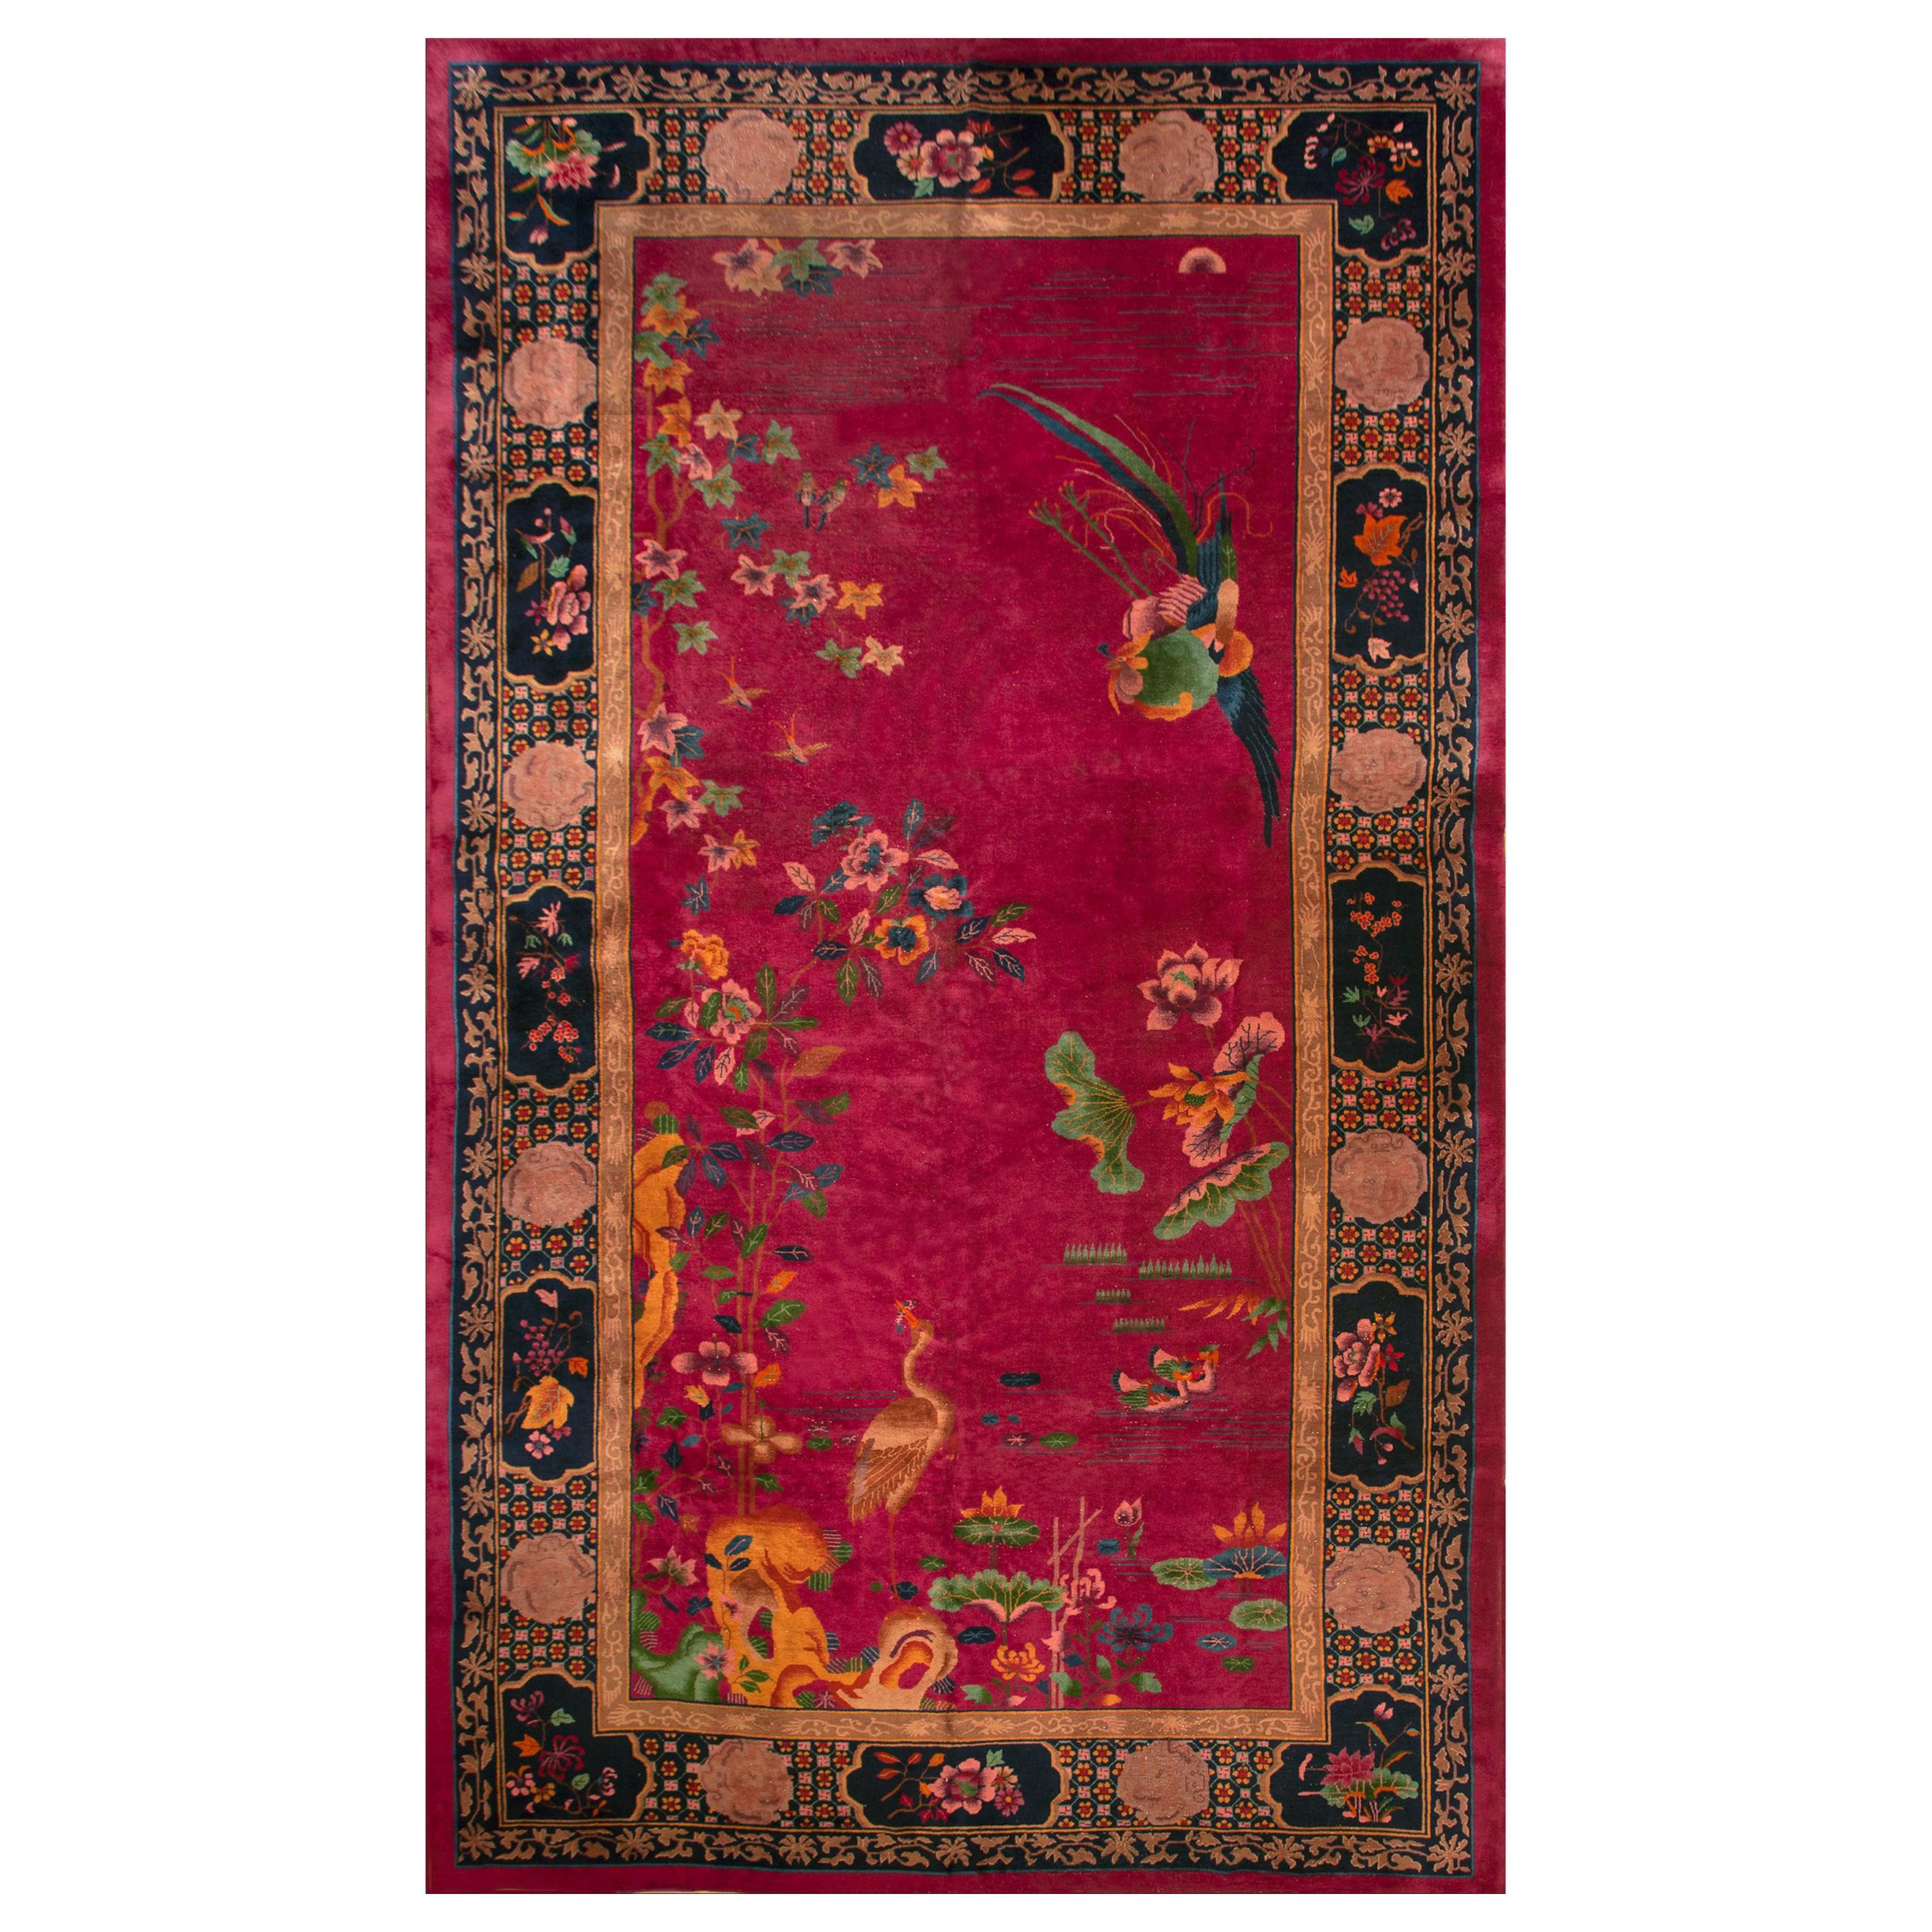 1920s Chinese Art Deco Carpet ( 10' x 17'5" - 305 x 530 )